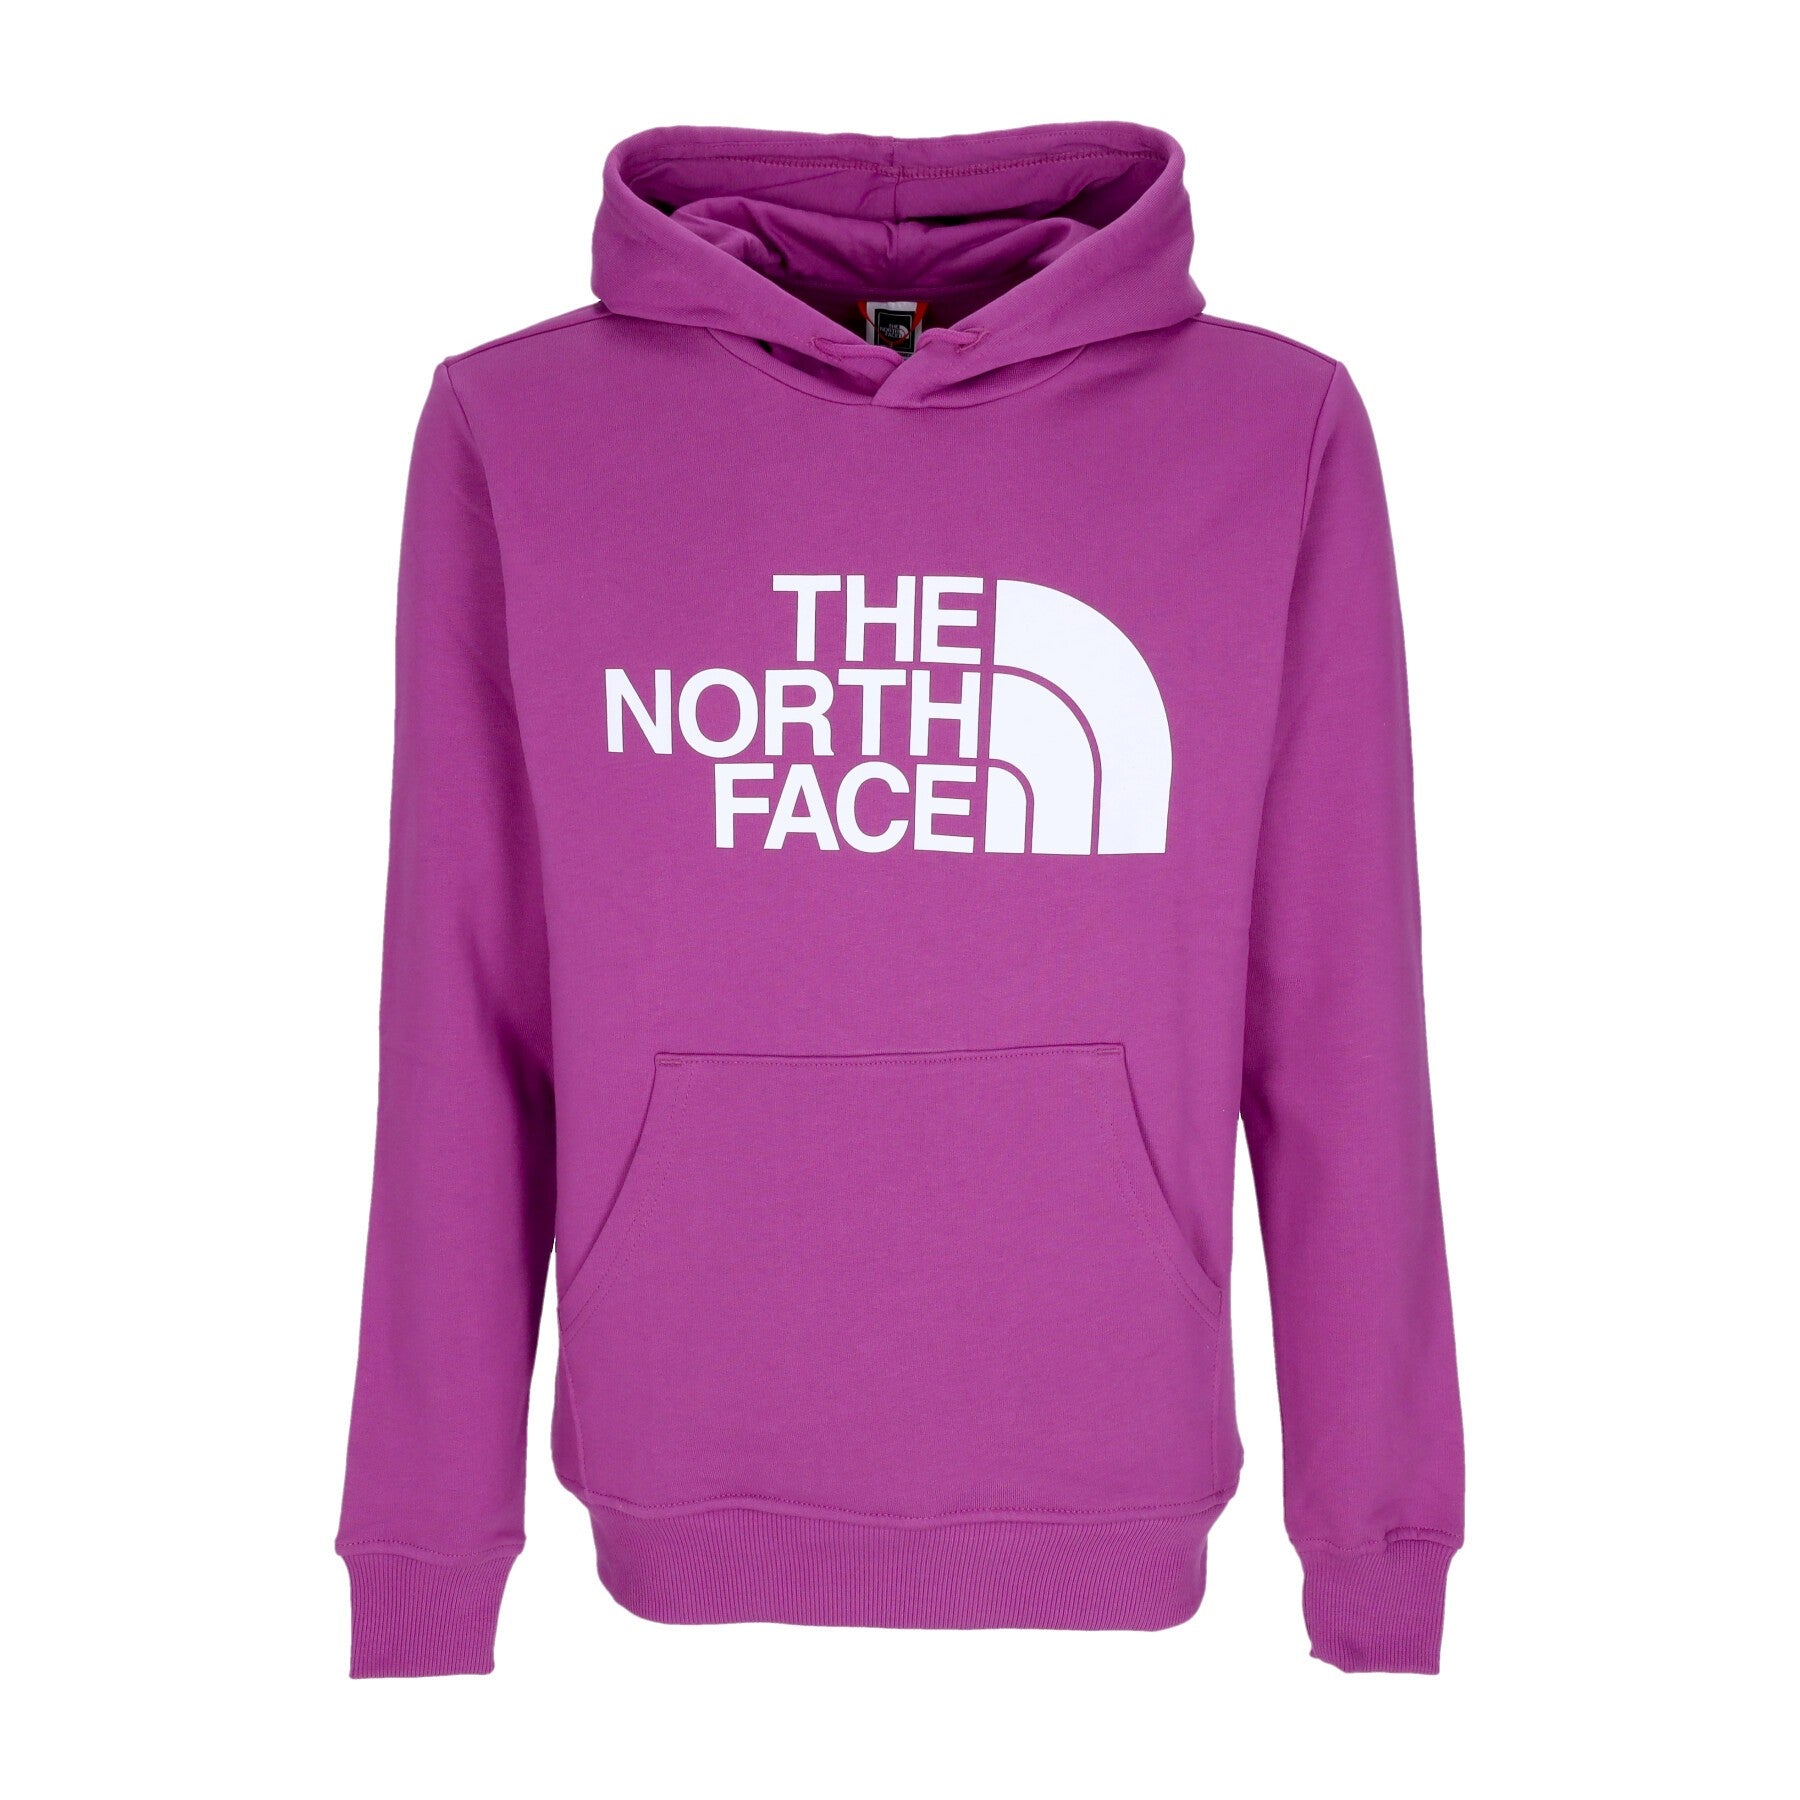 The North Face, Felpa Cappuccio Uomo Standard Hoodie, Purple Cactus Flower